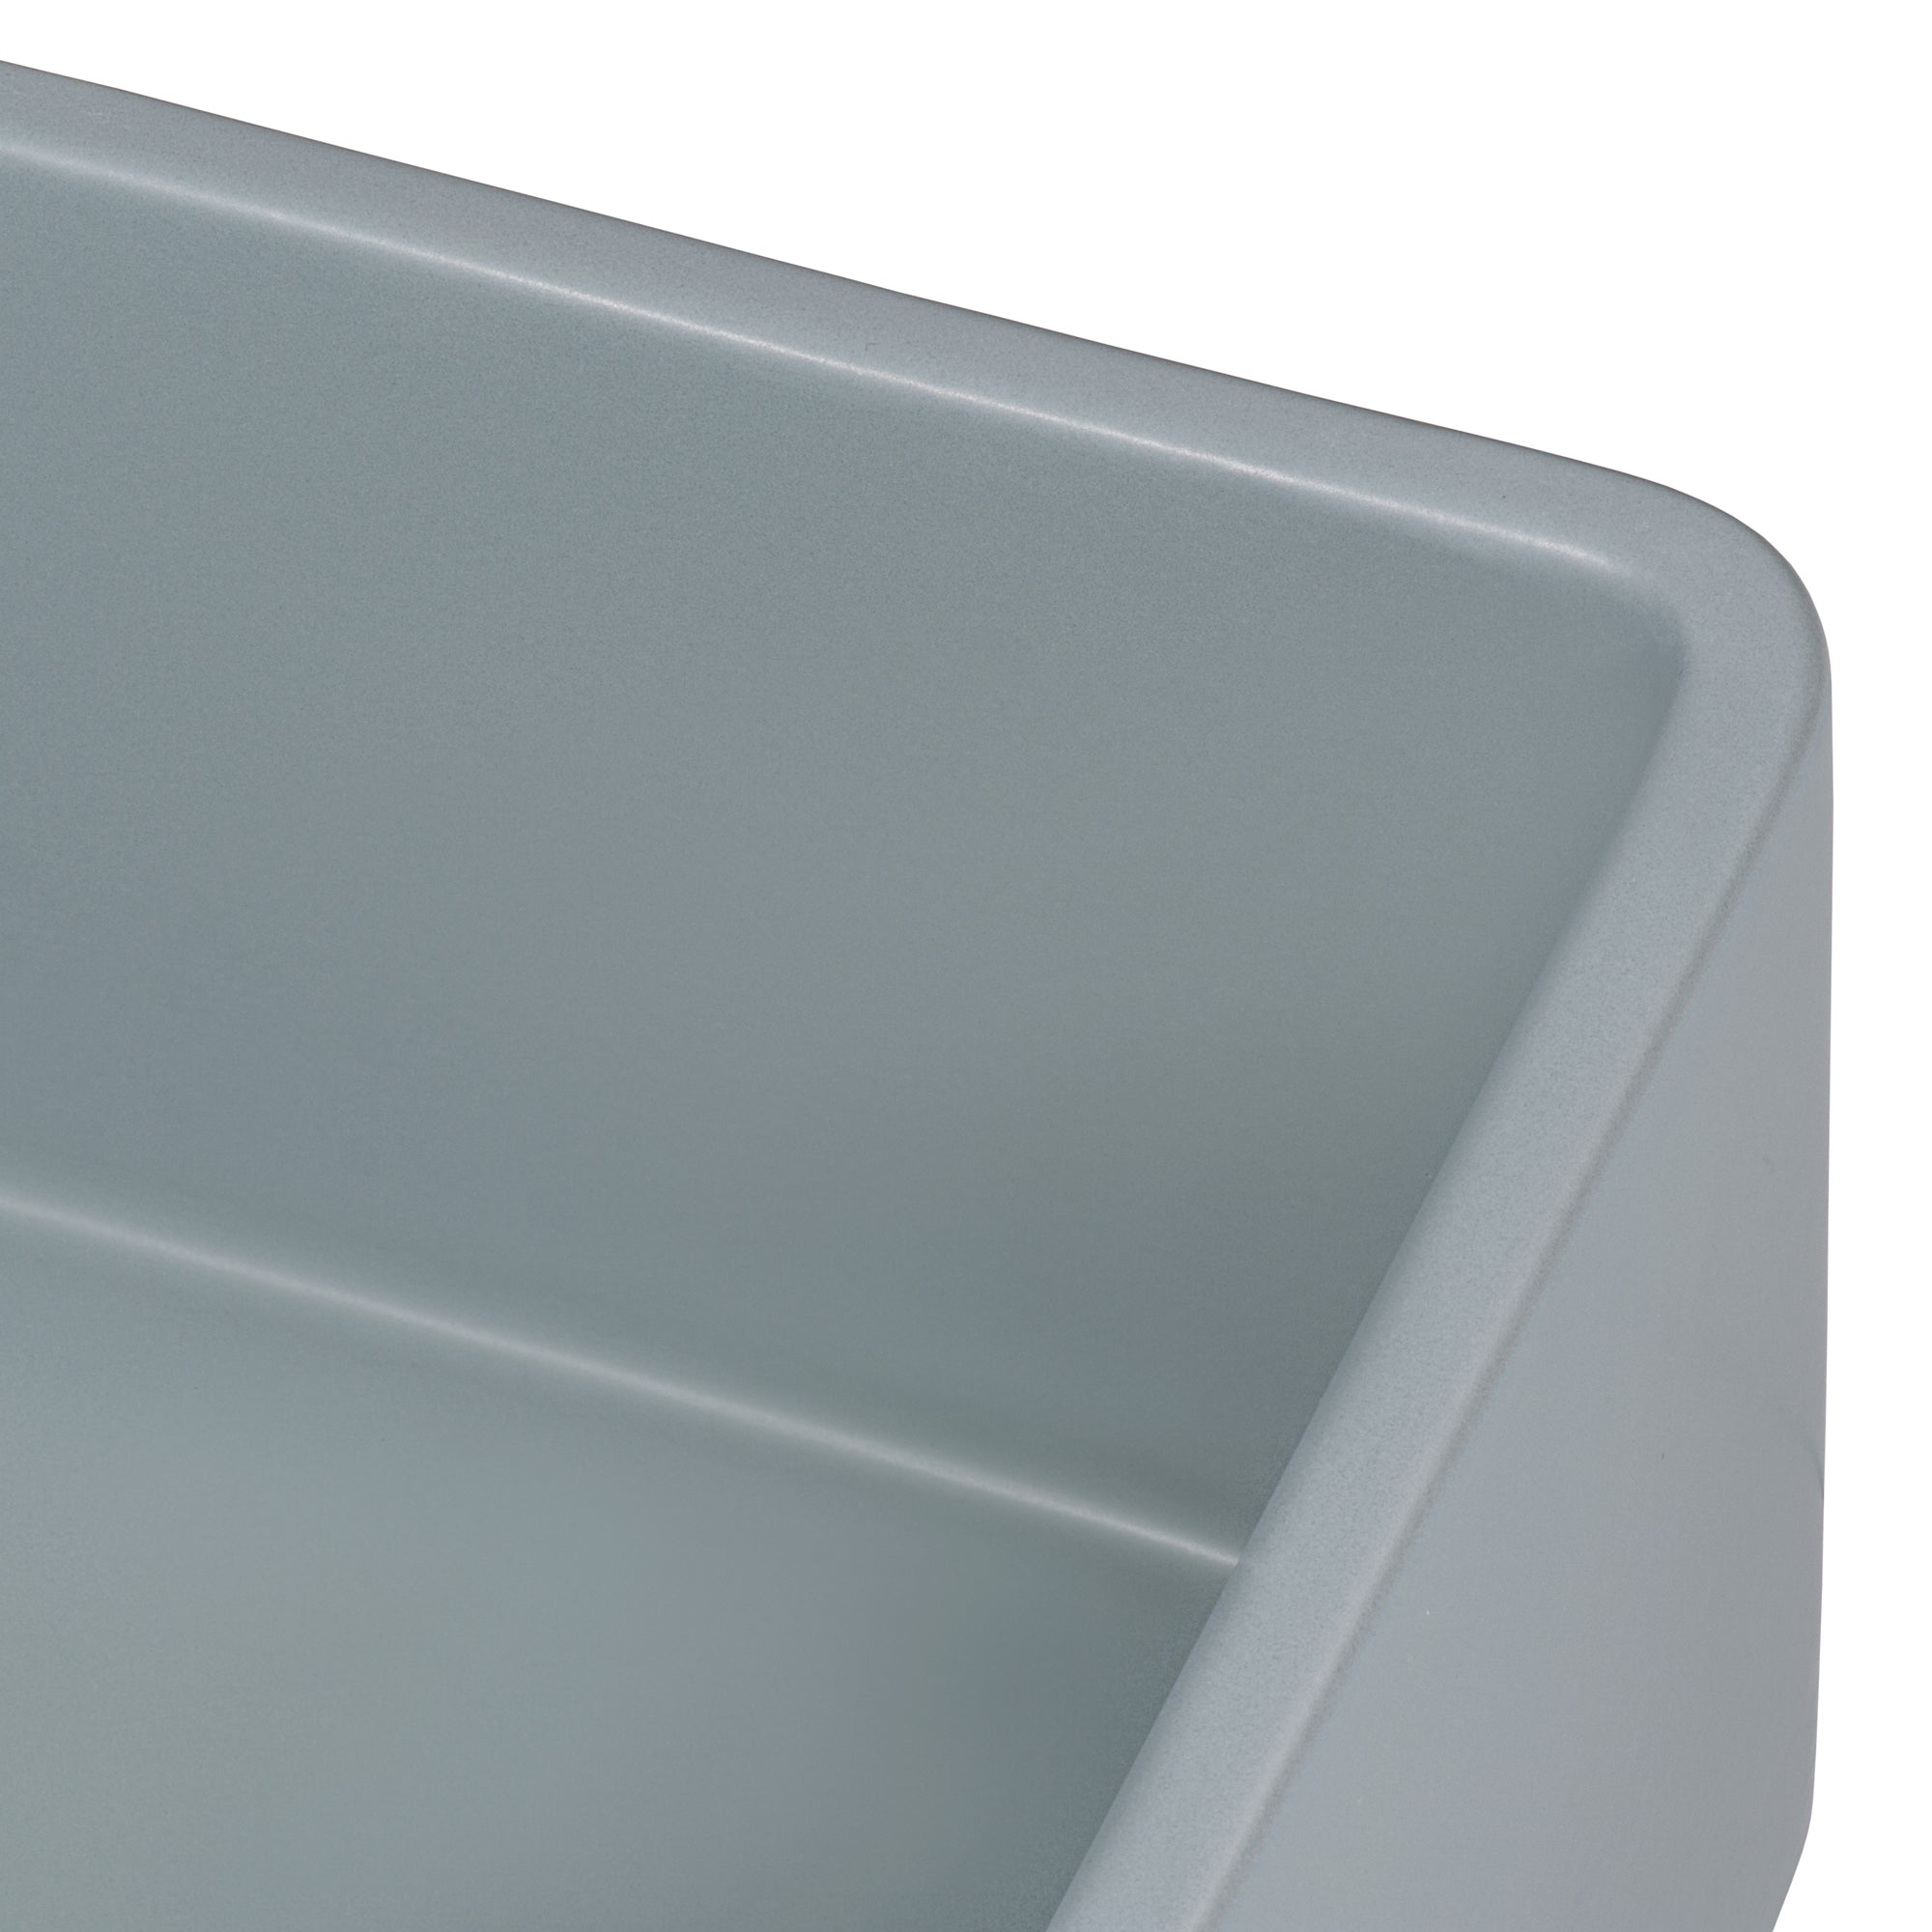 30 x 20 inch Fireclay Reversible Farmhouse Apron-Front Kitchen Sink Single Bowl – Horizon Gray